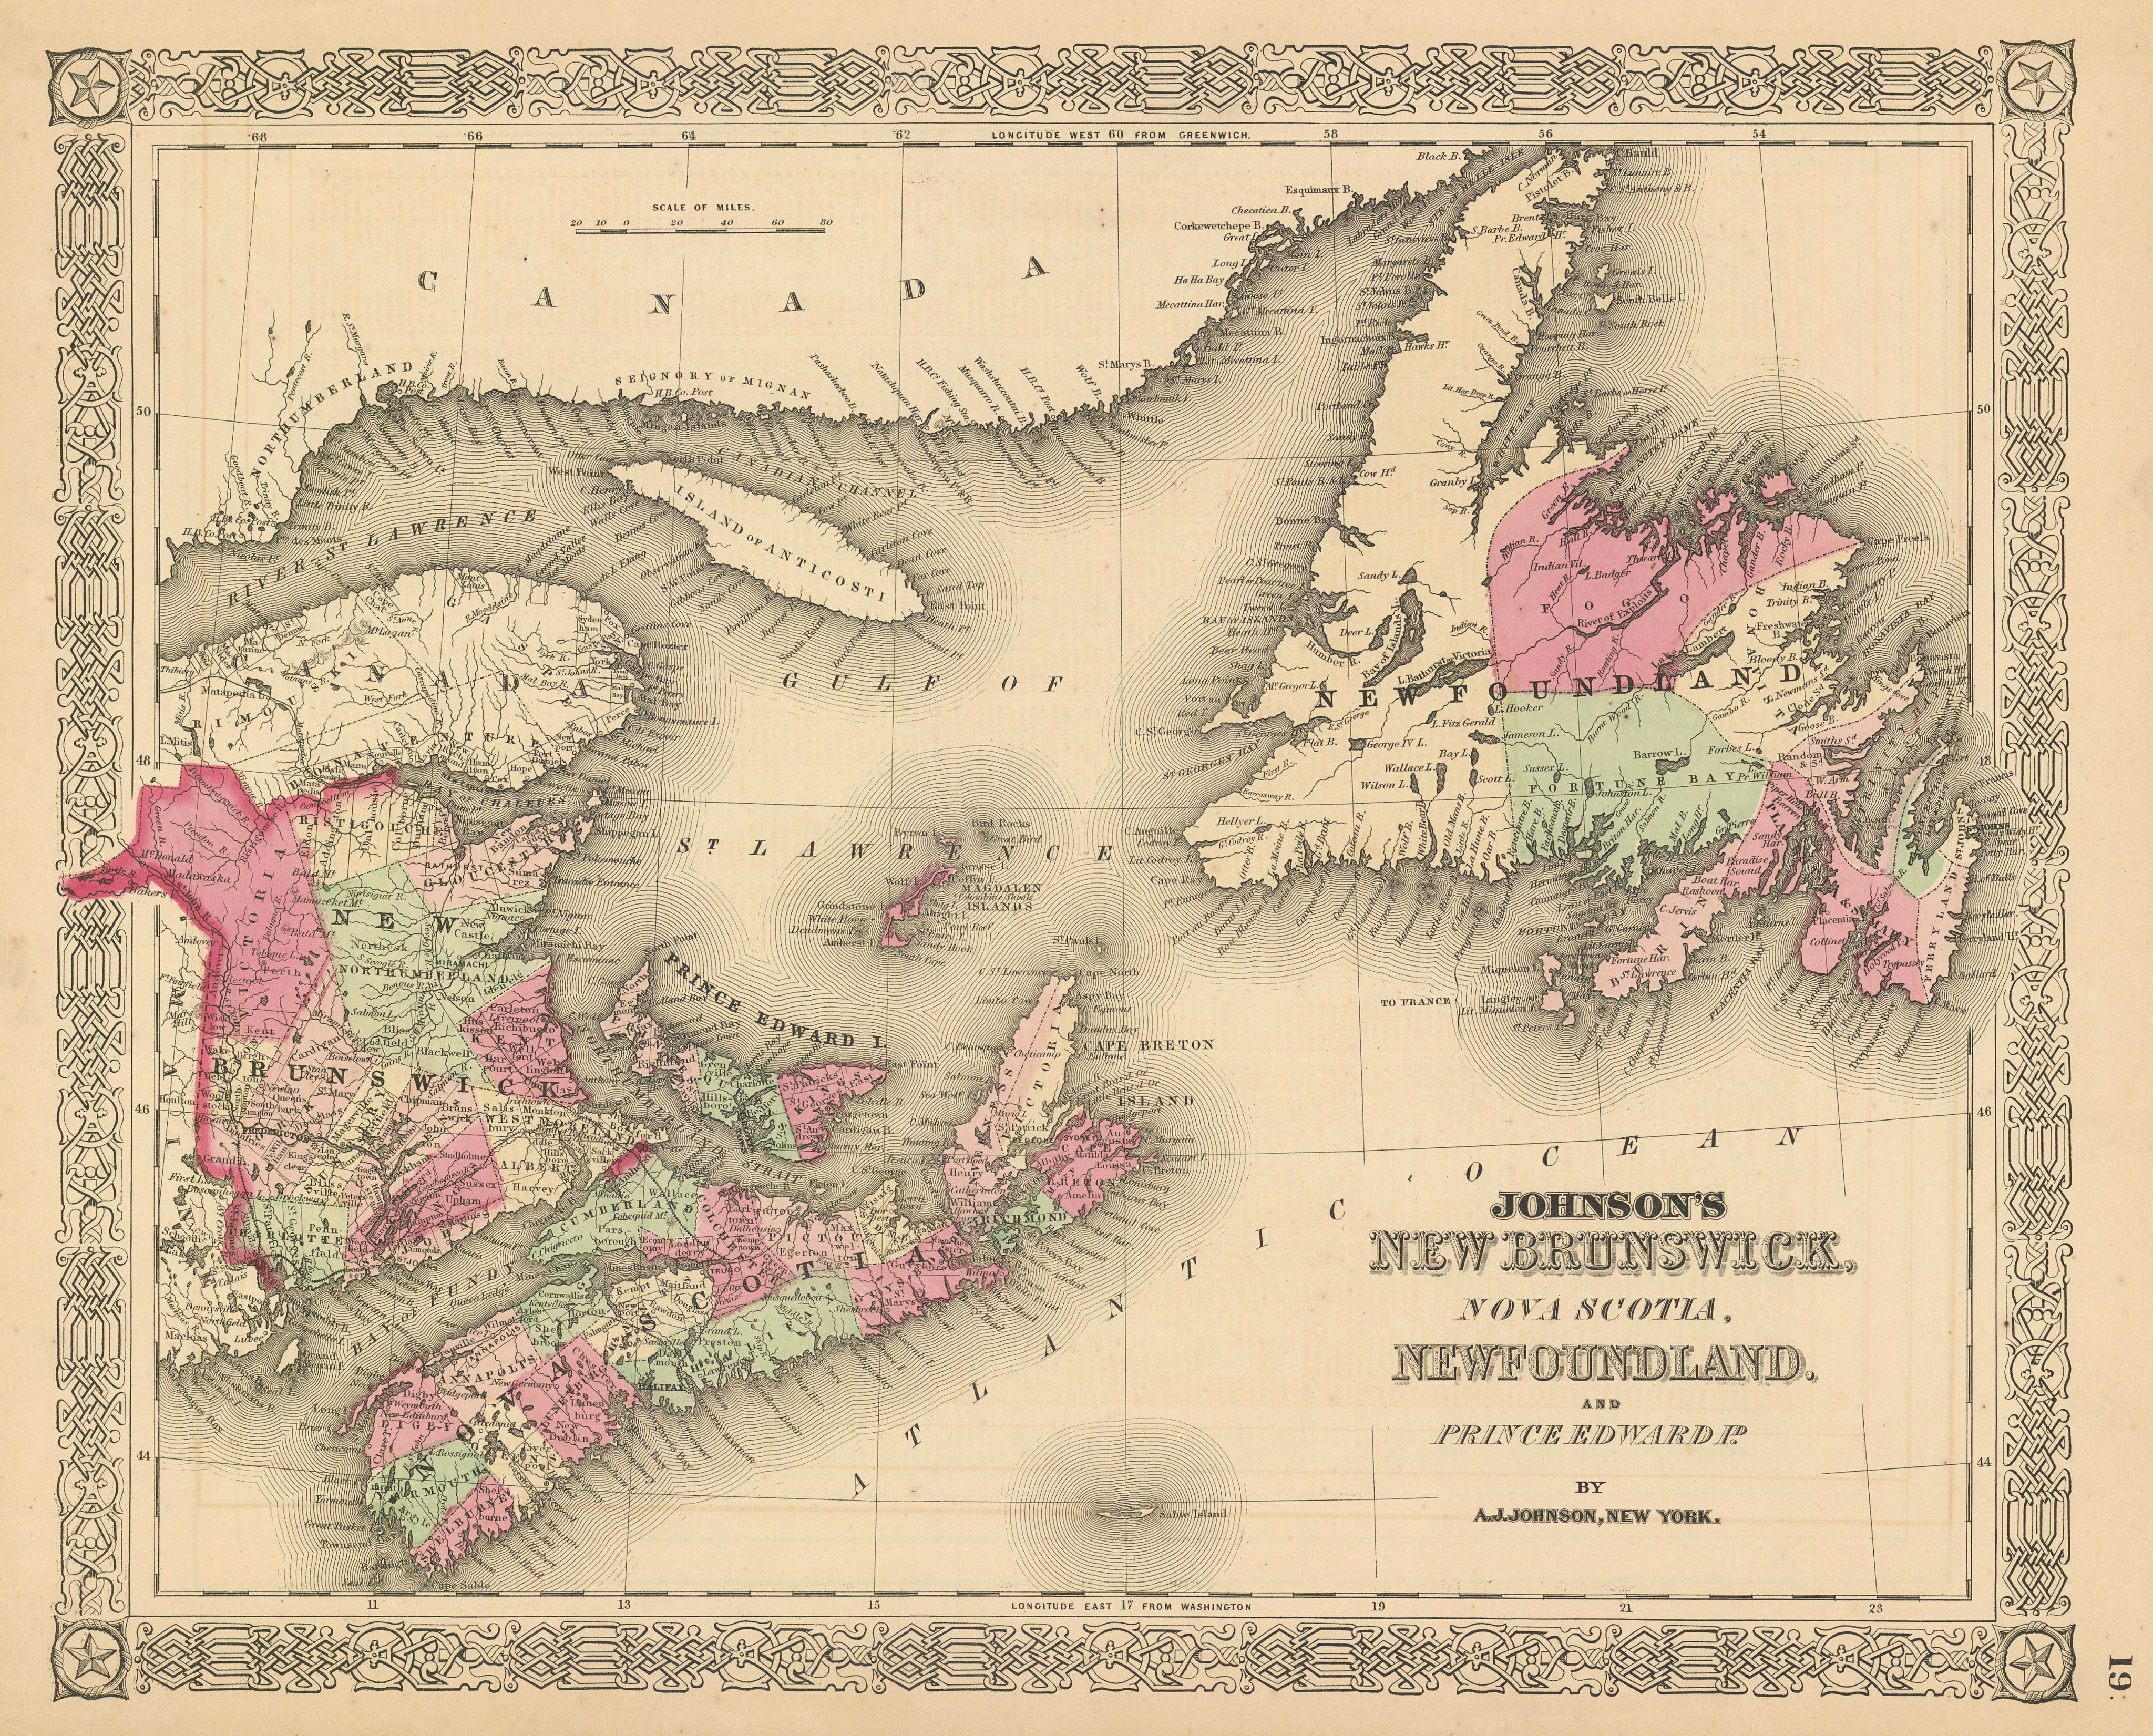 Associate Product Johnson's New Brunswick, Nova Scotia, Newfoundland & Prince Edward Id. 1867 map